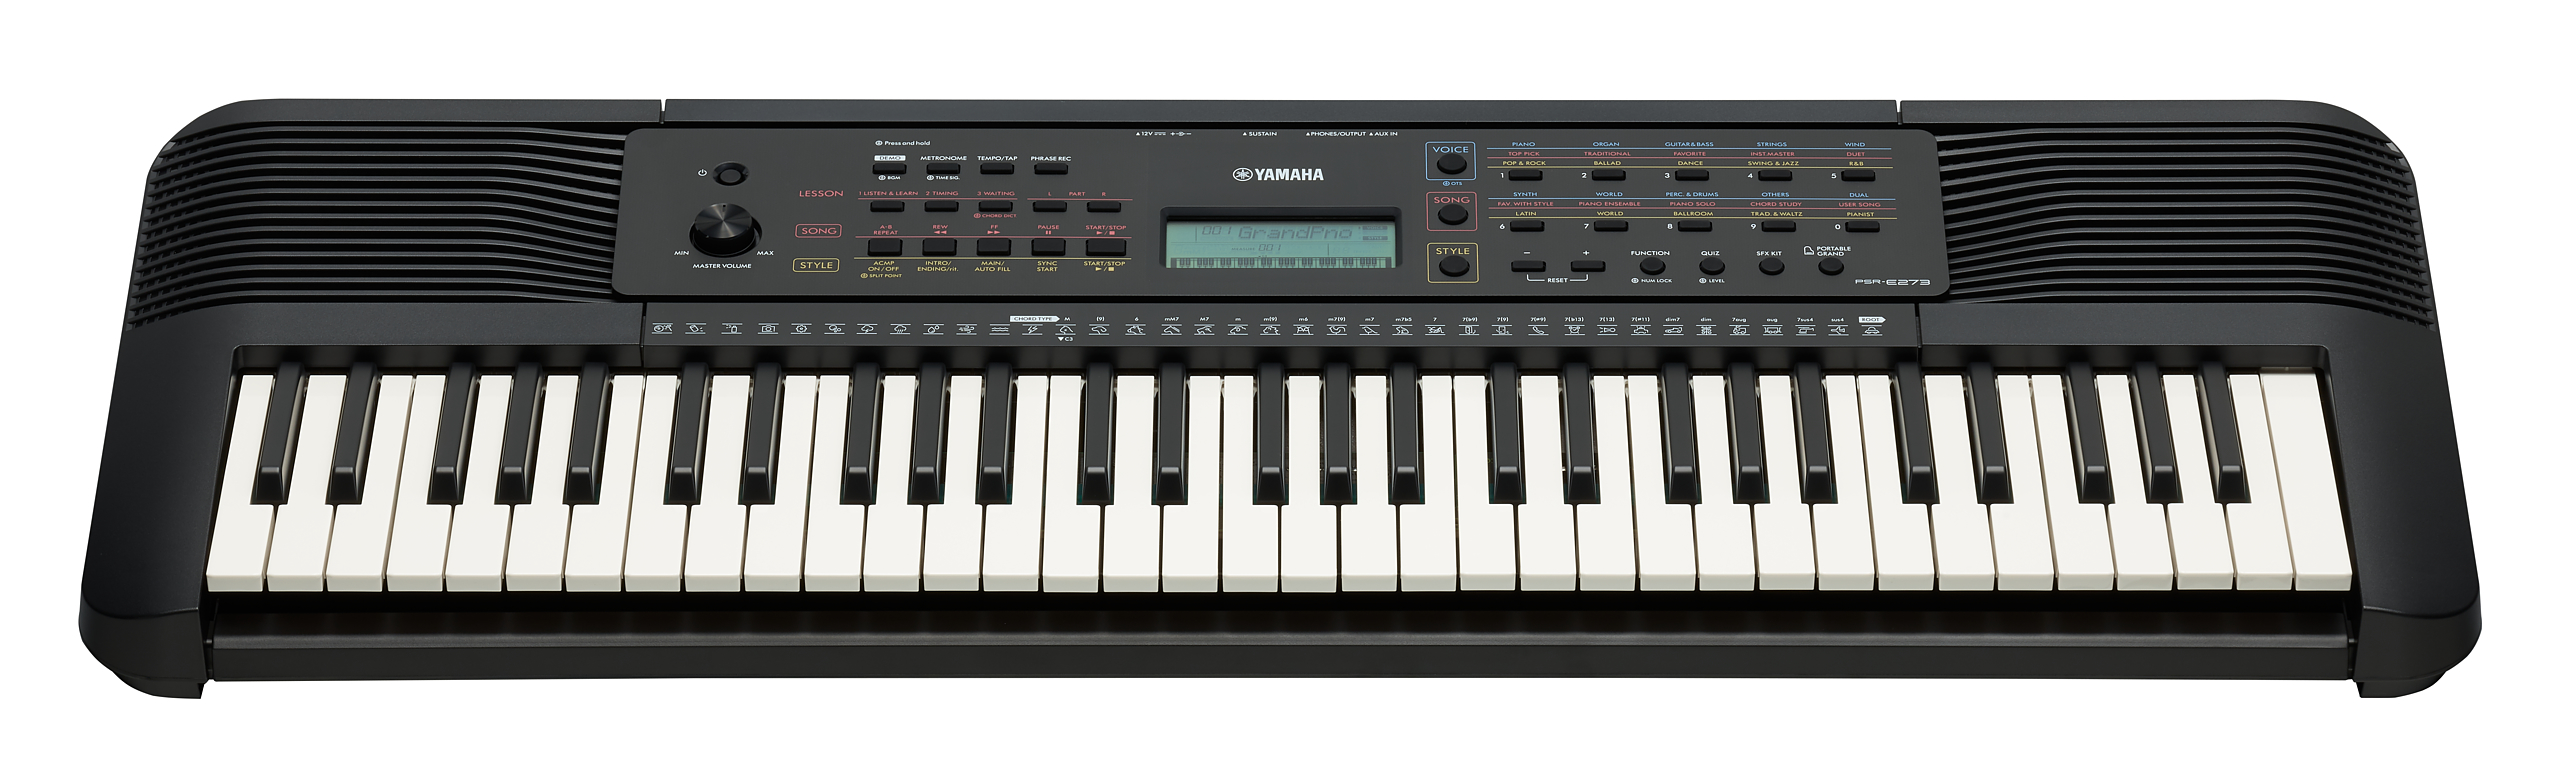 Yamaha Psr E273 - Entertainer Keyboard - Variation 1